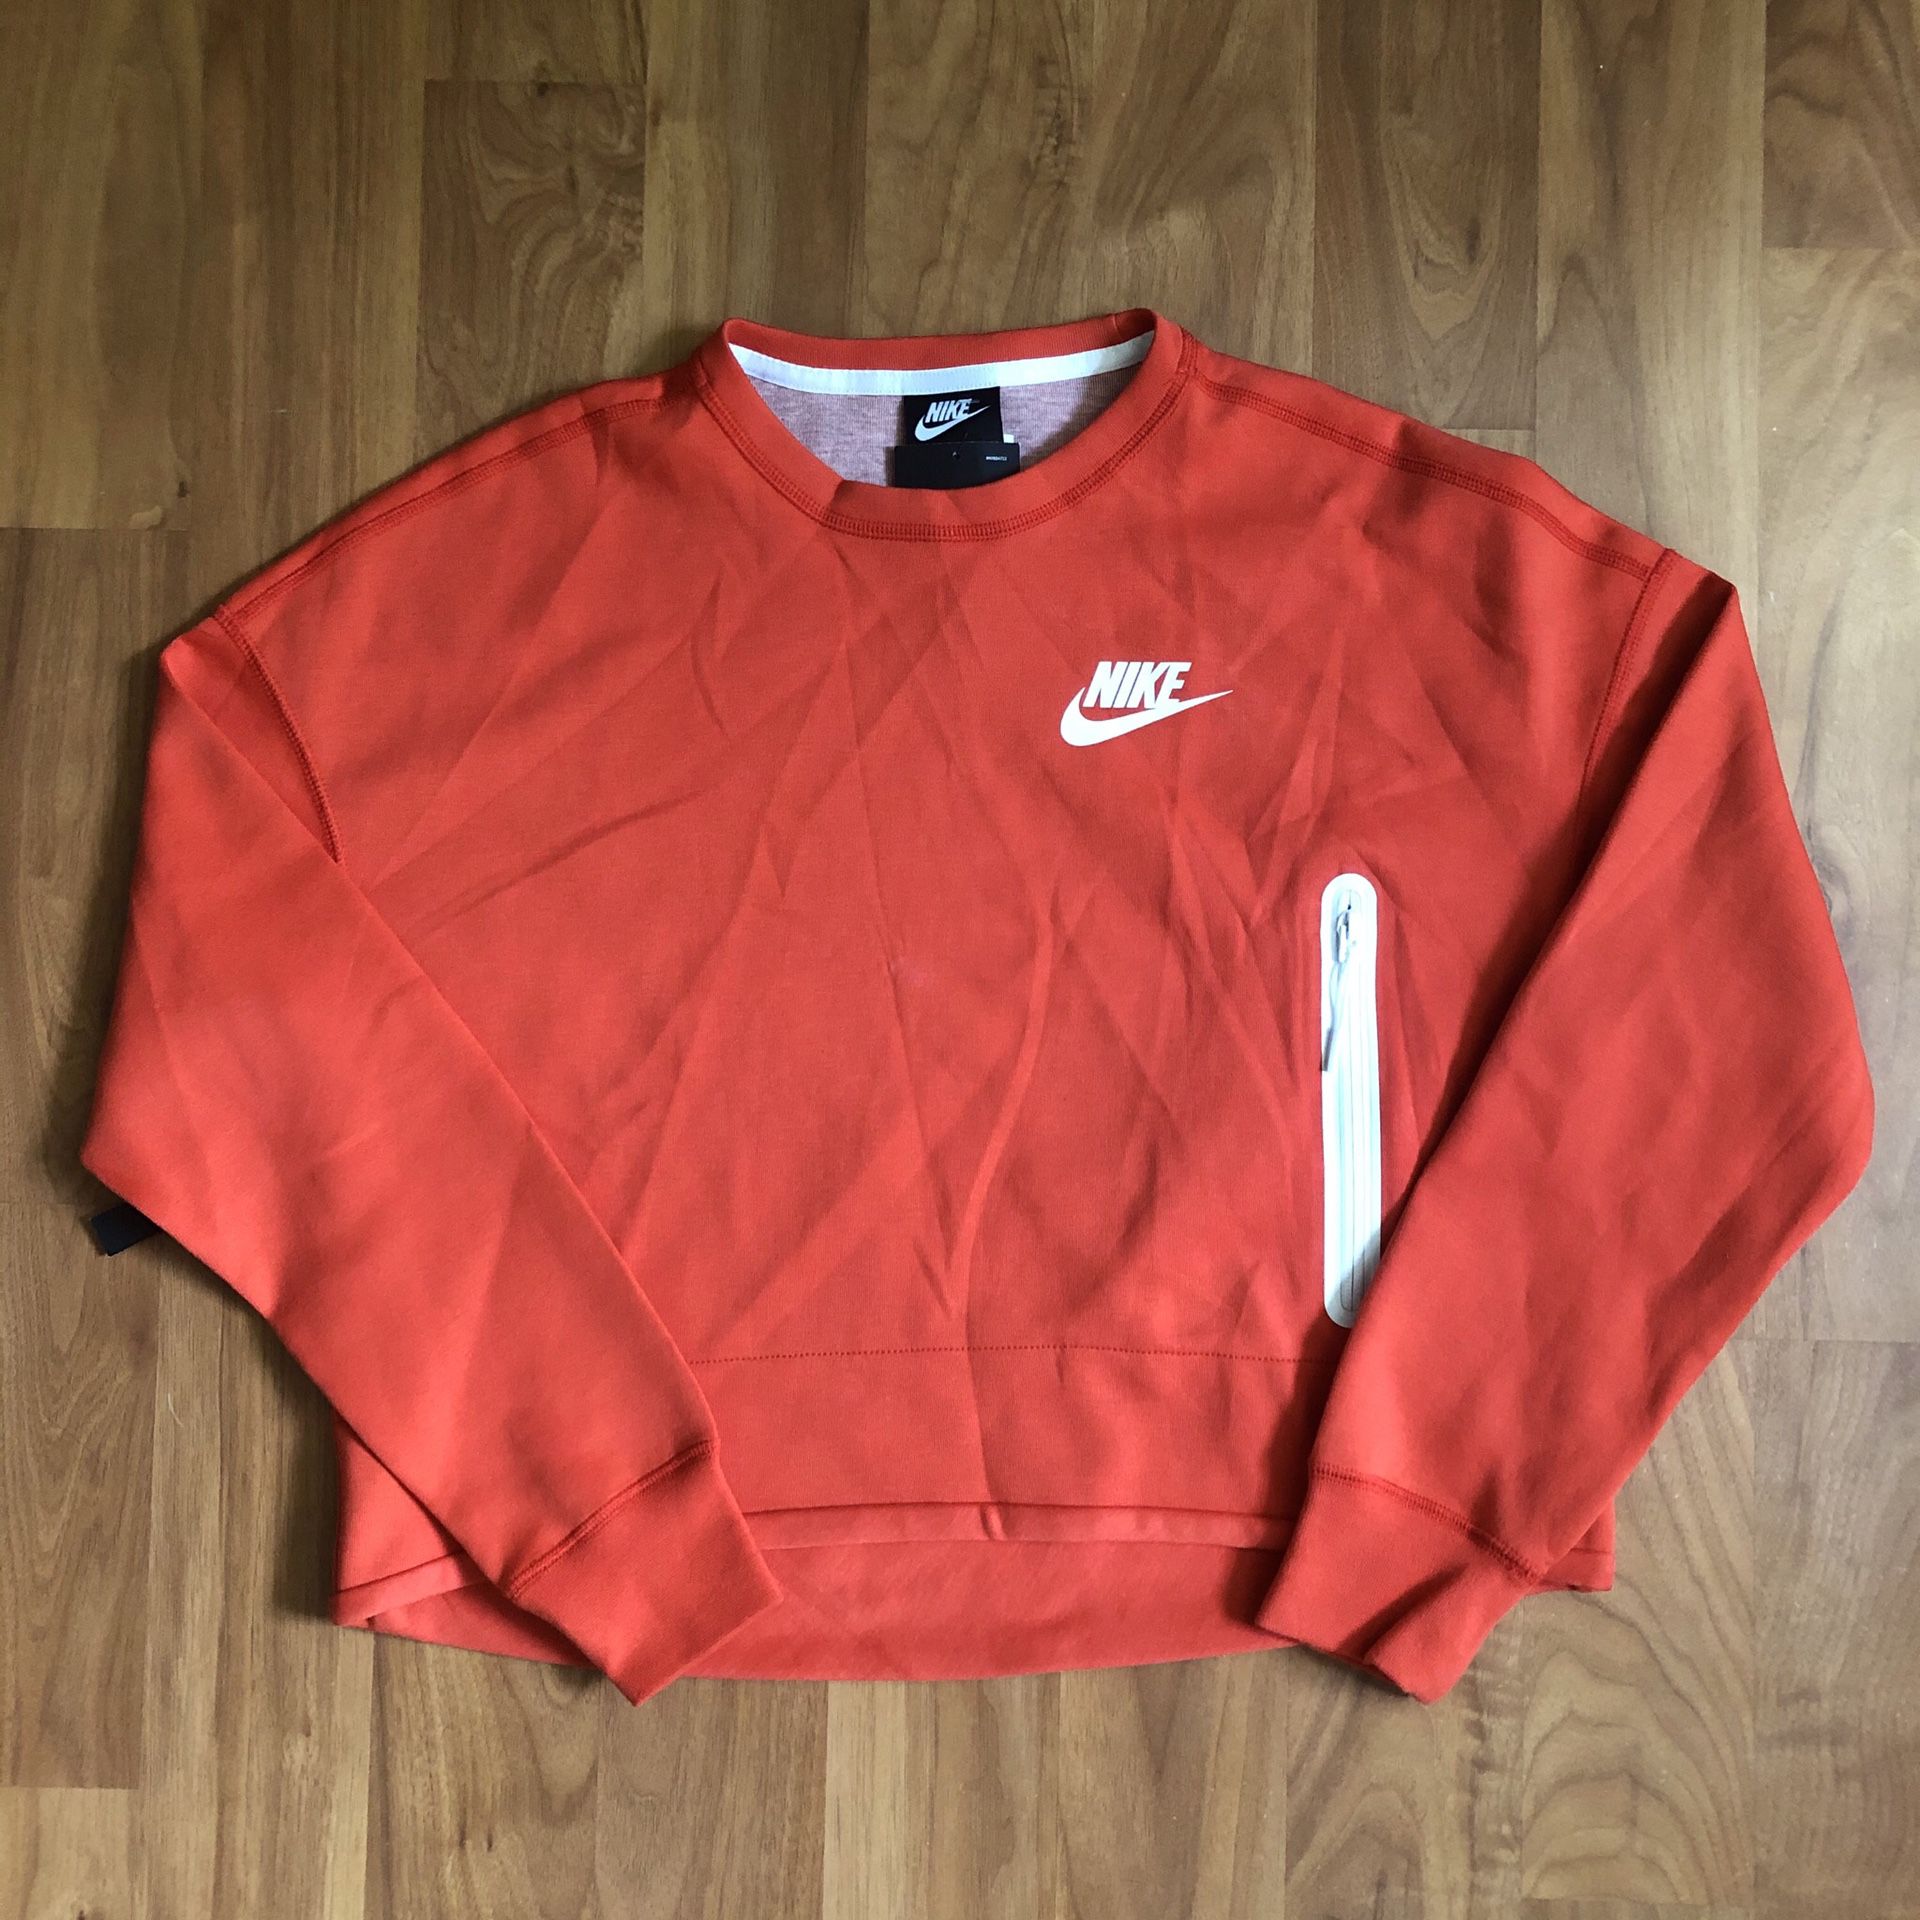 New Women’s Nike Tech Fleece Crewneck Sweatshirt Size M